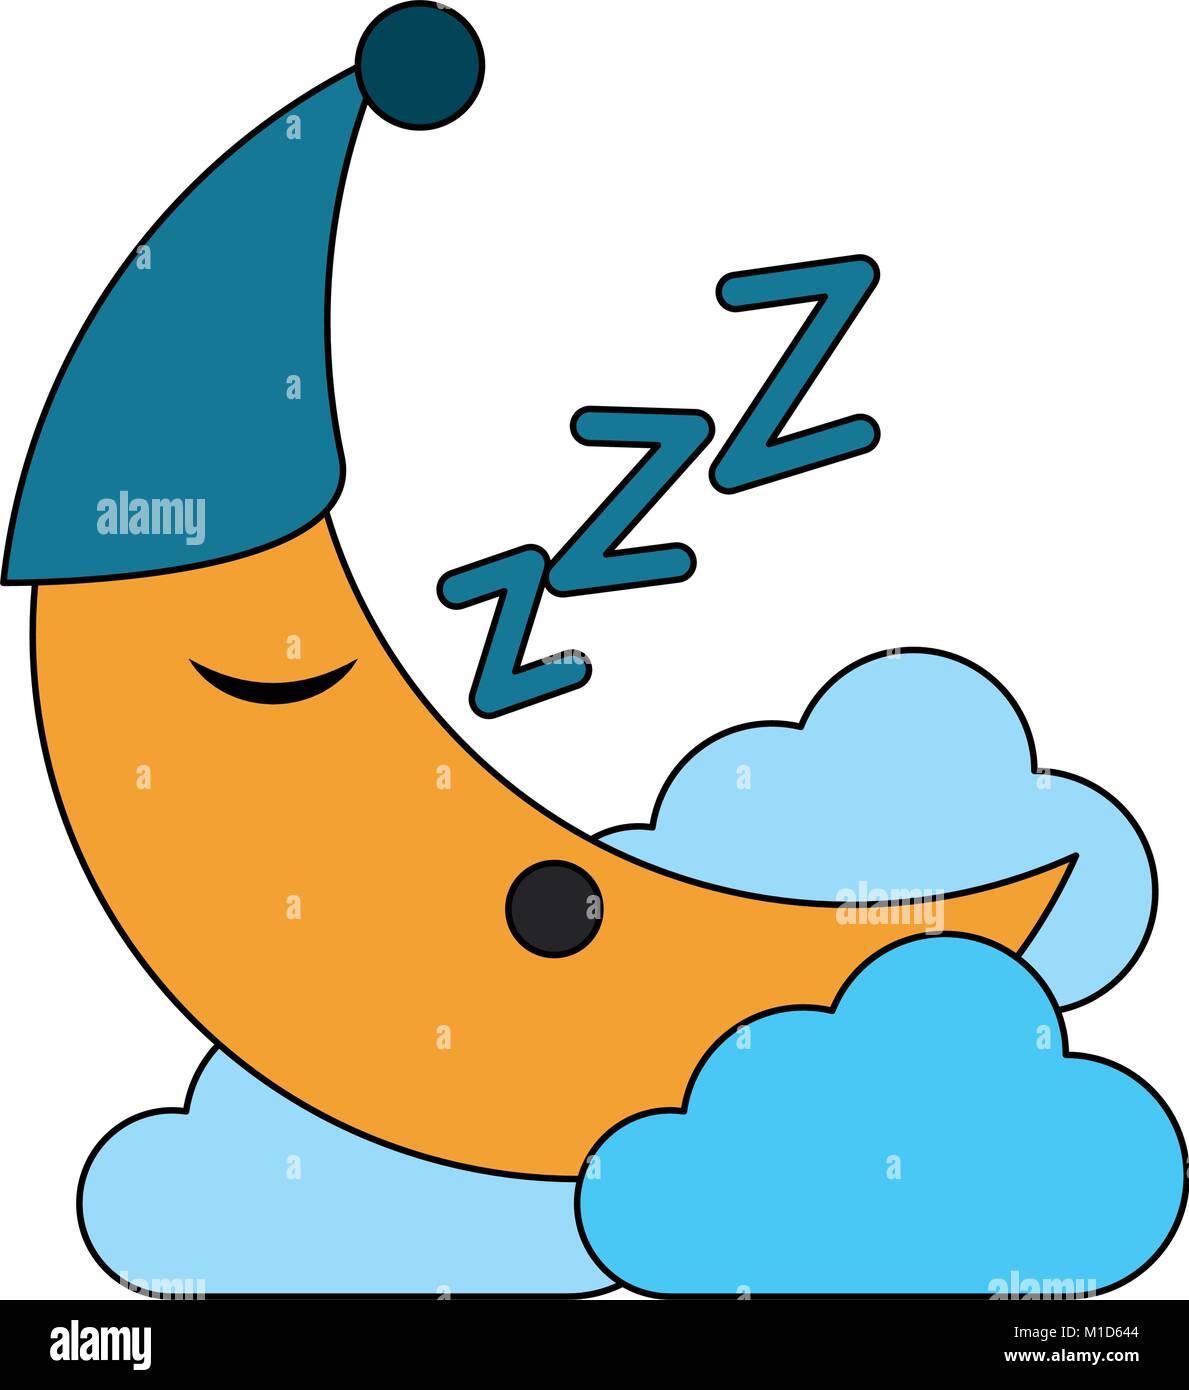 Sleeping cartoon hi-res stock photography and images - Alamy